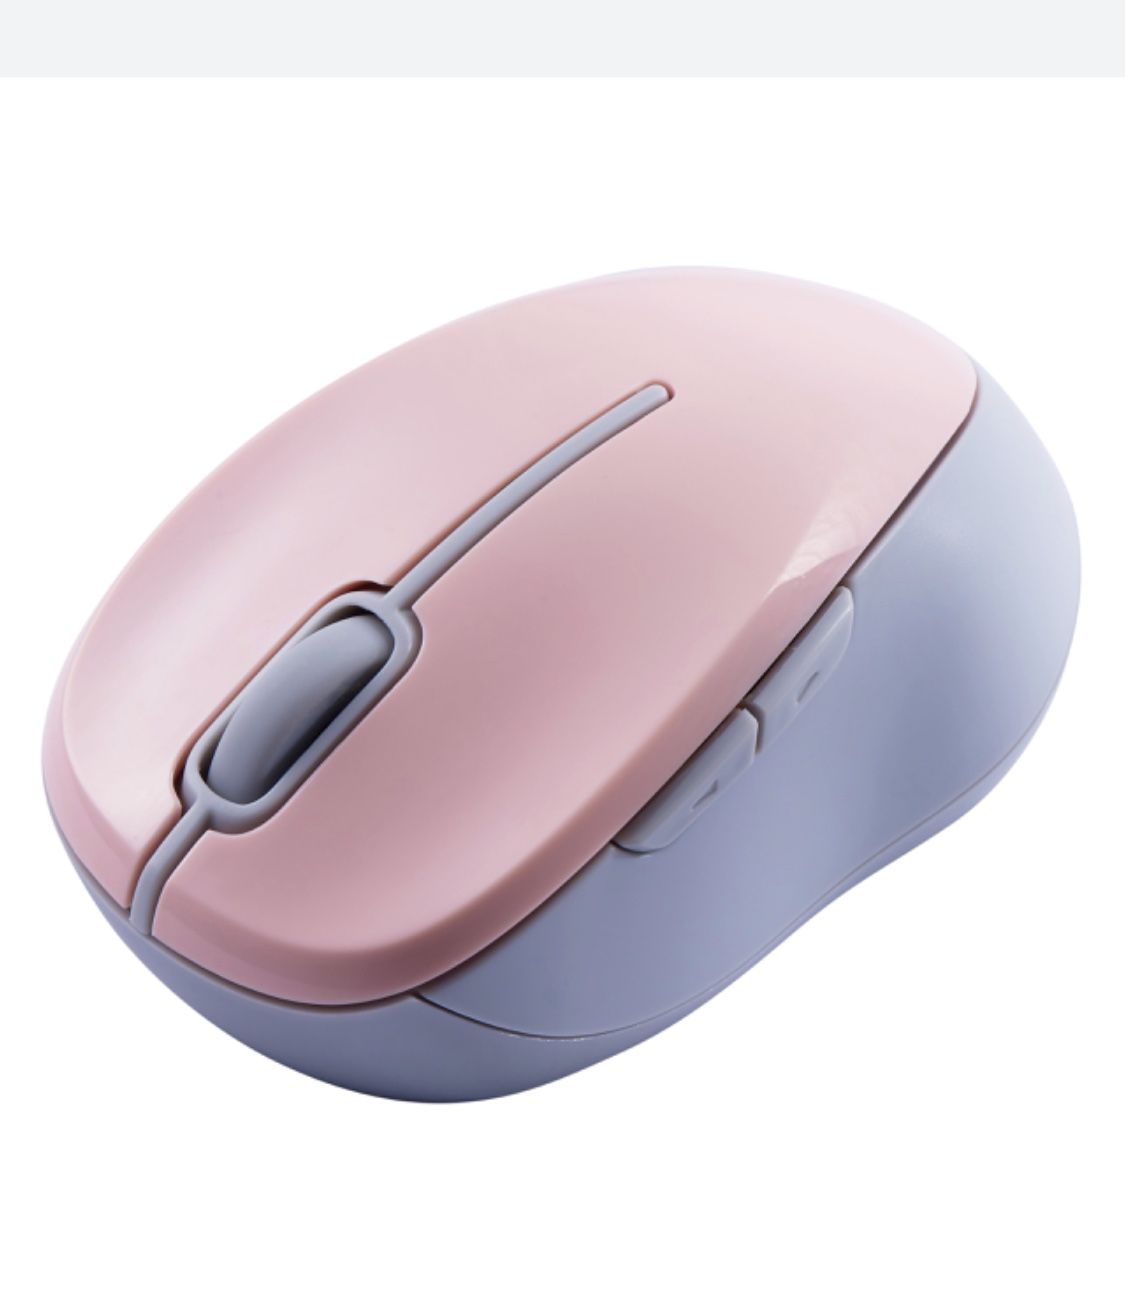 Onn 2.4GHz Wireless Mouse